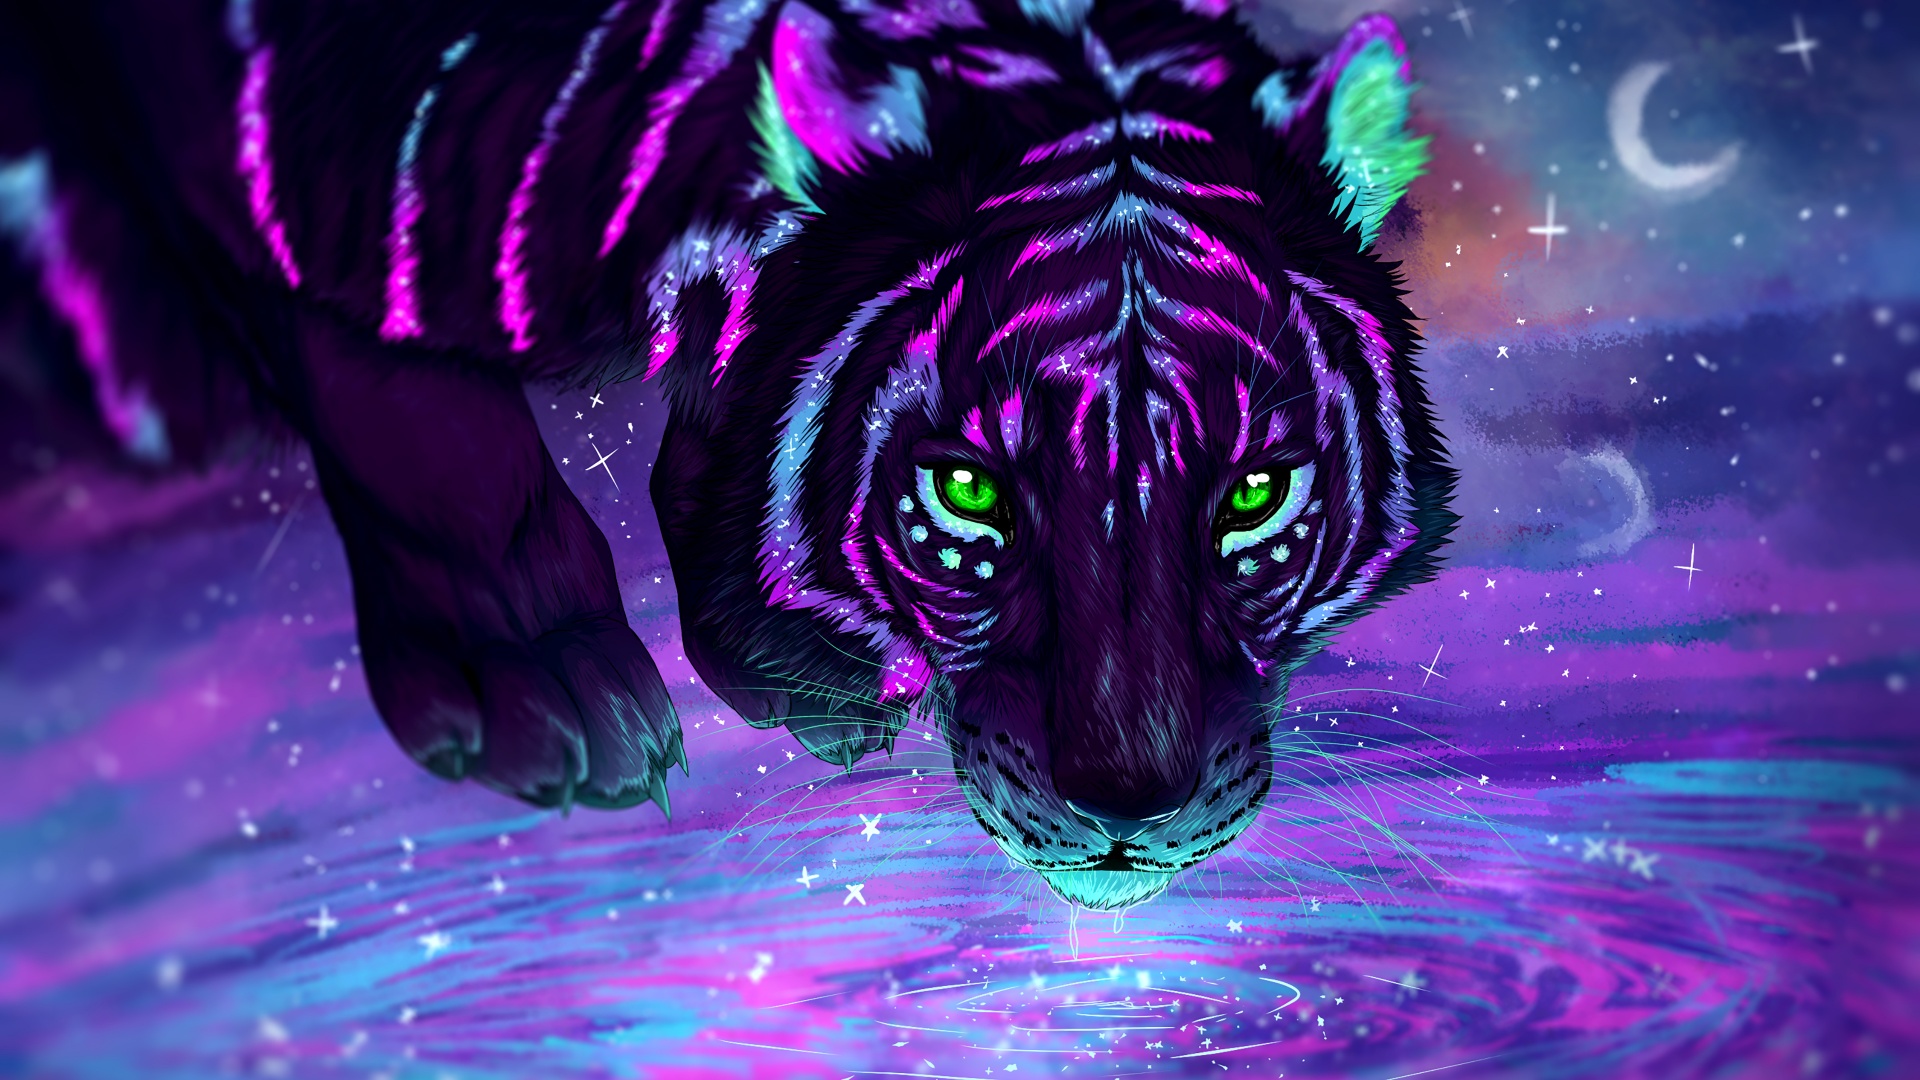 Tiger 4K Wallpaper, Neon, Digital paint, Glowing, Graphics CGI, #5097